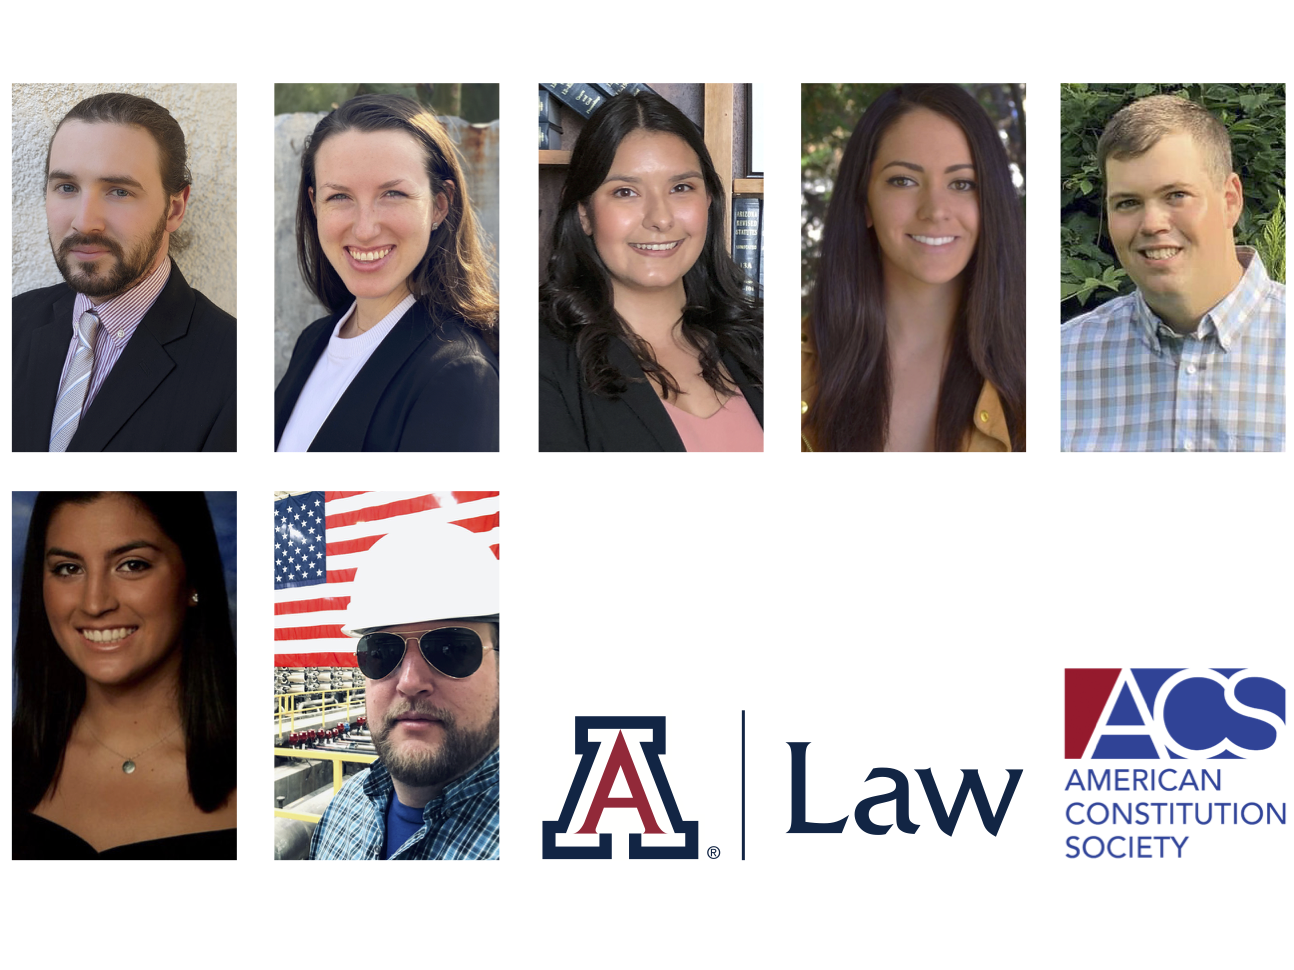 Arizona Law ACS Student Chapter